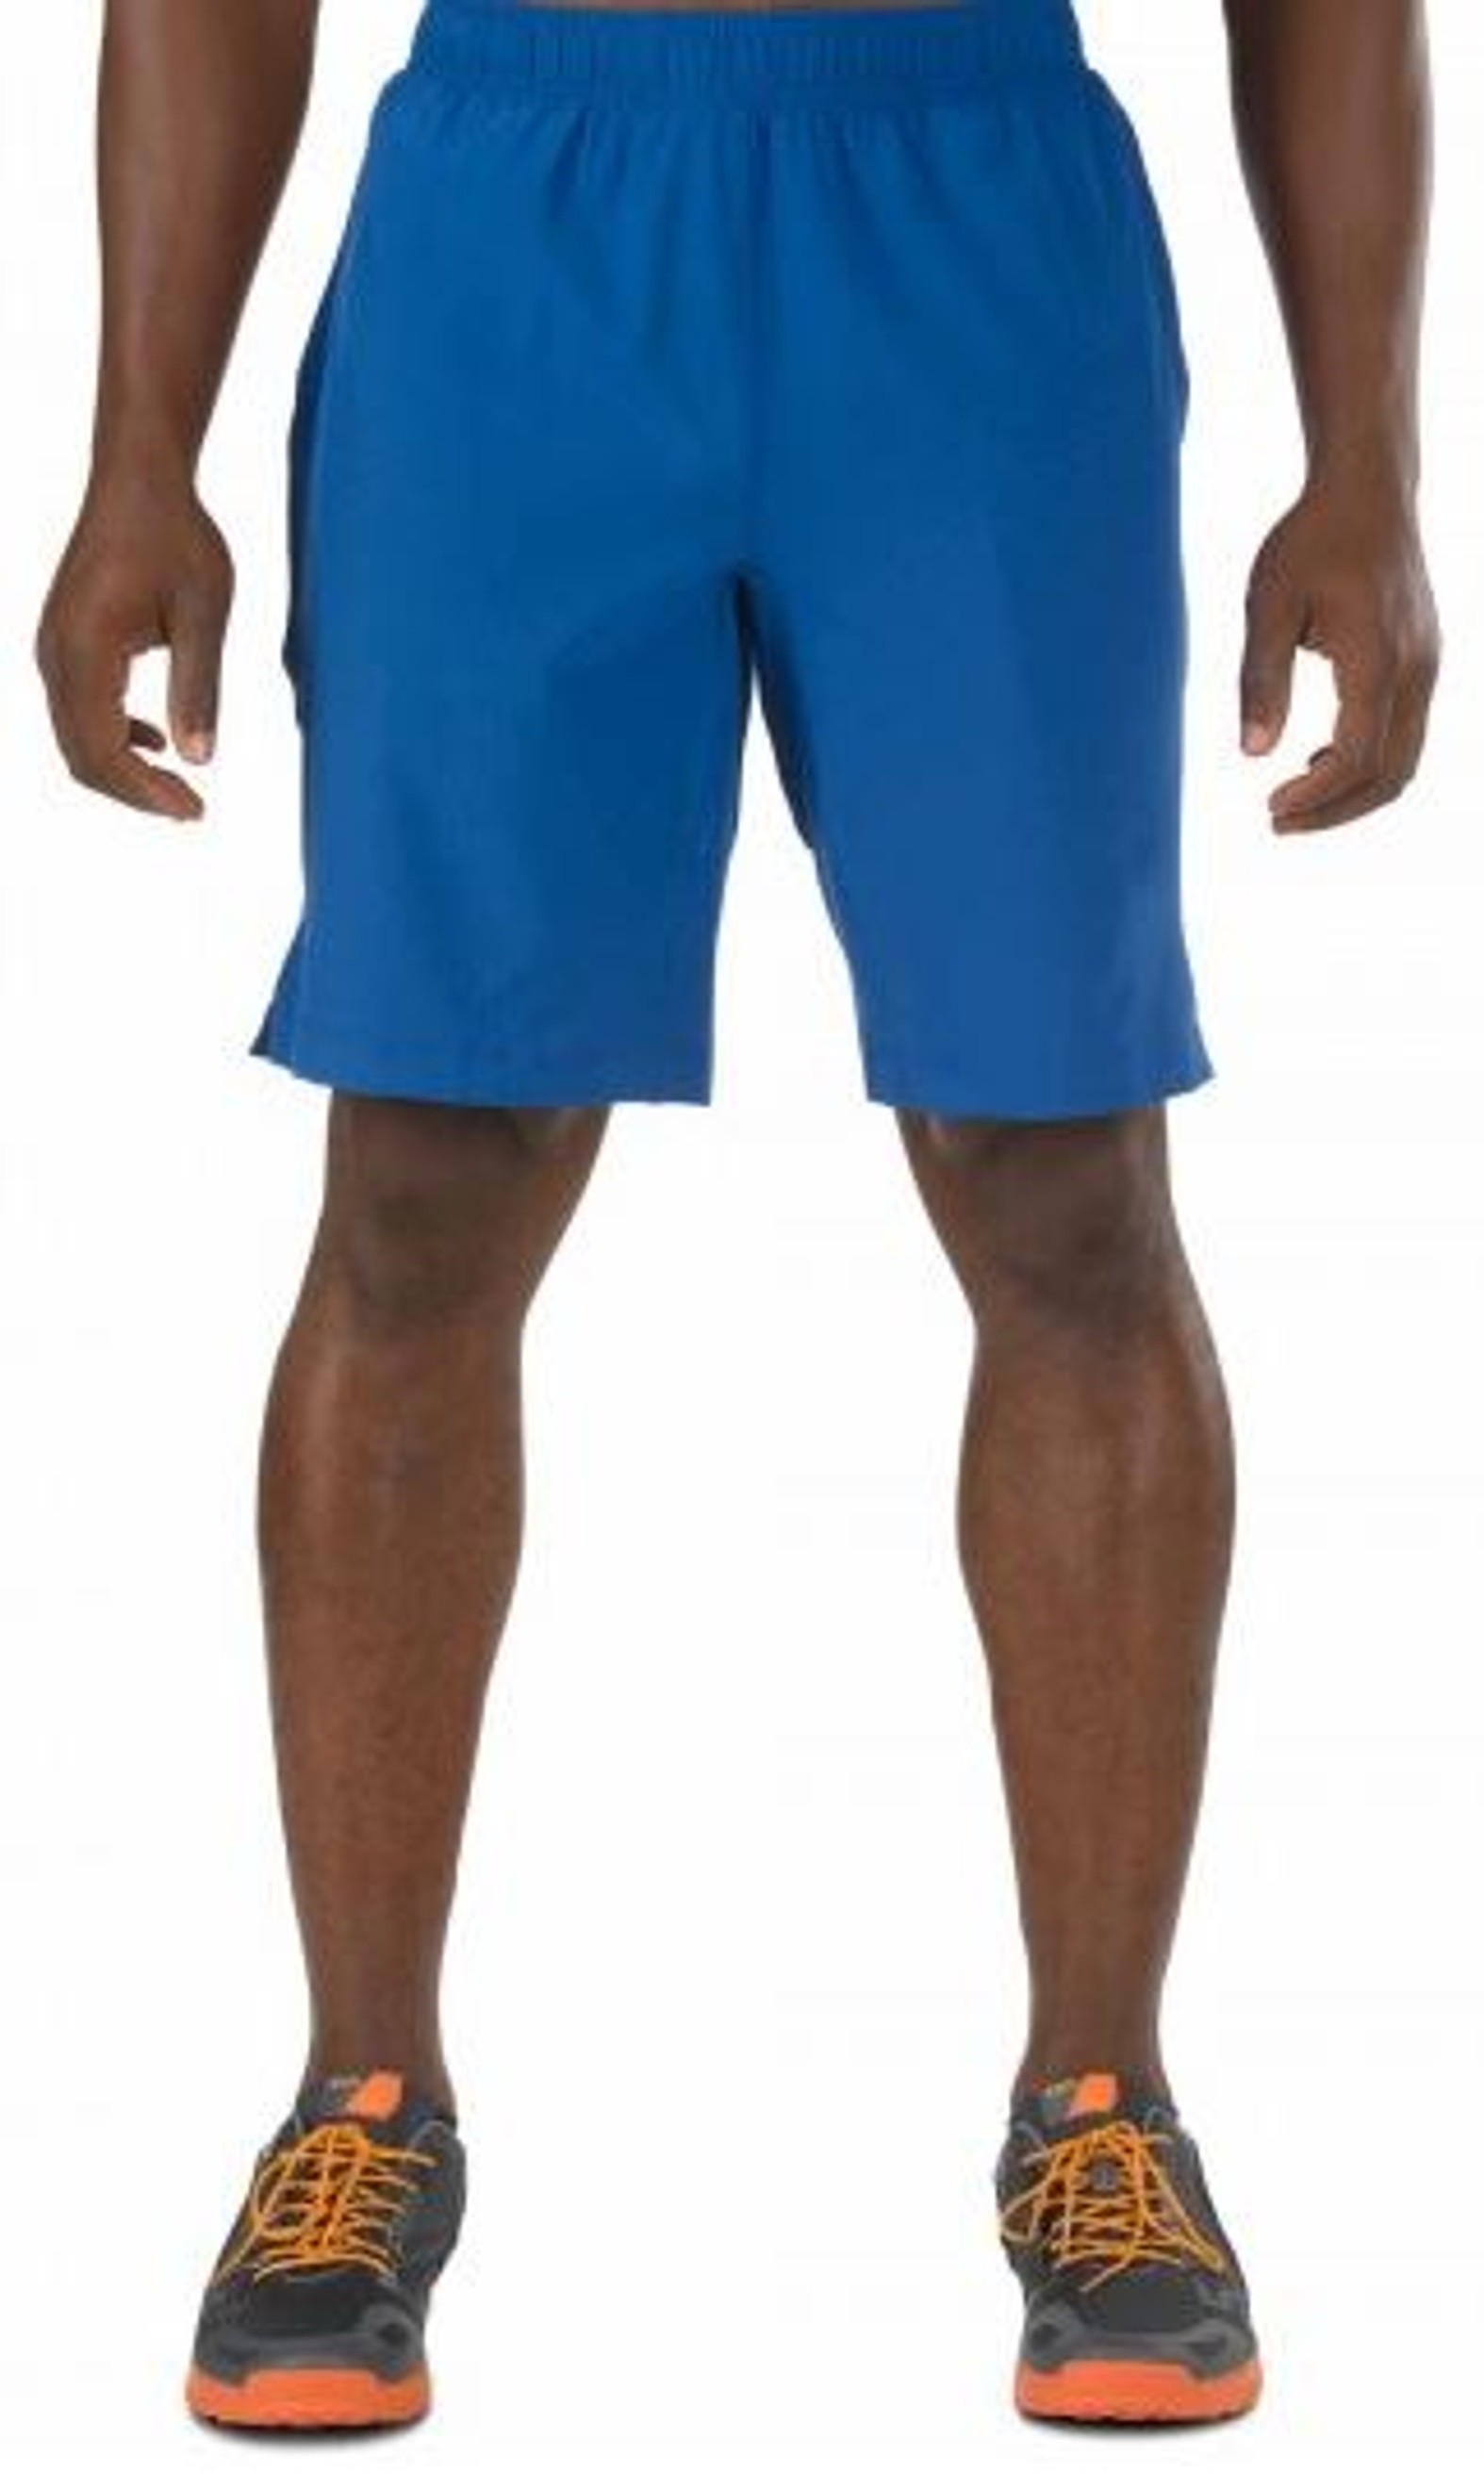 5.11 RECON Training Shorts - Nautical Blue